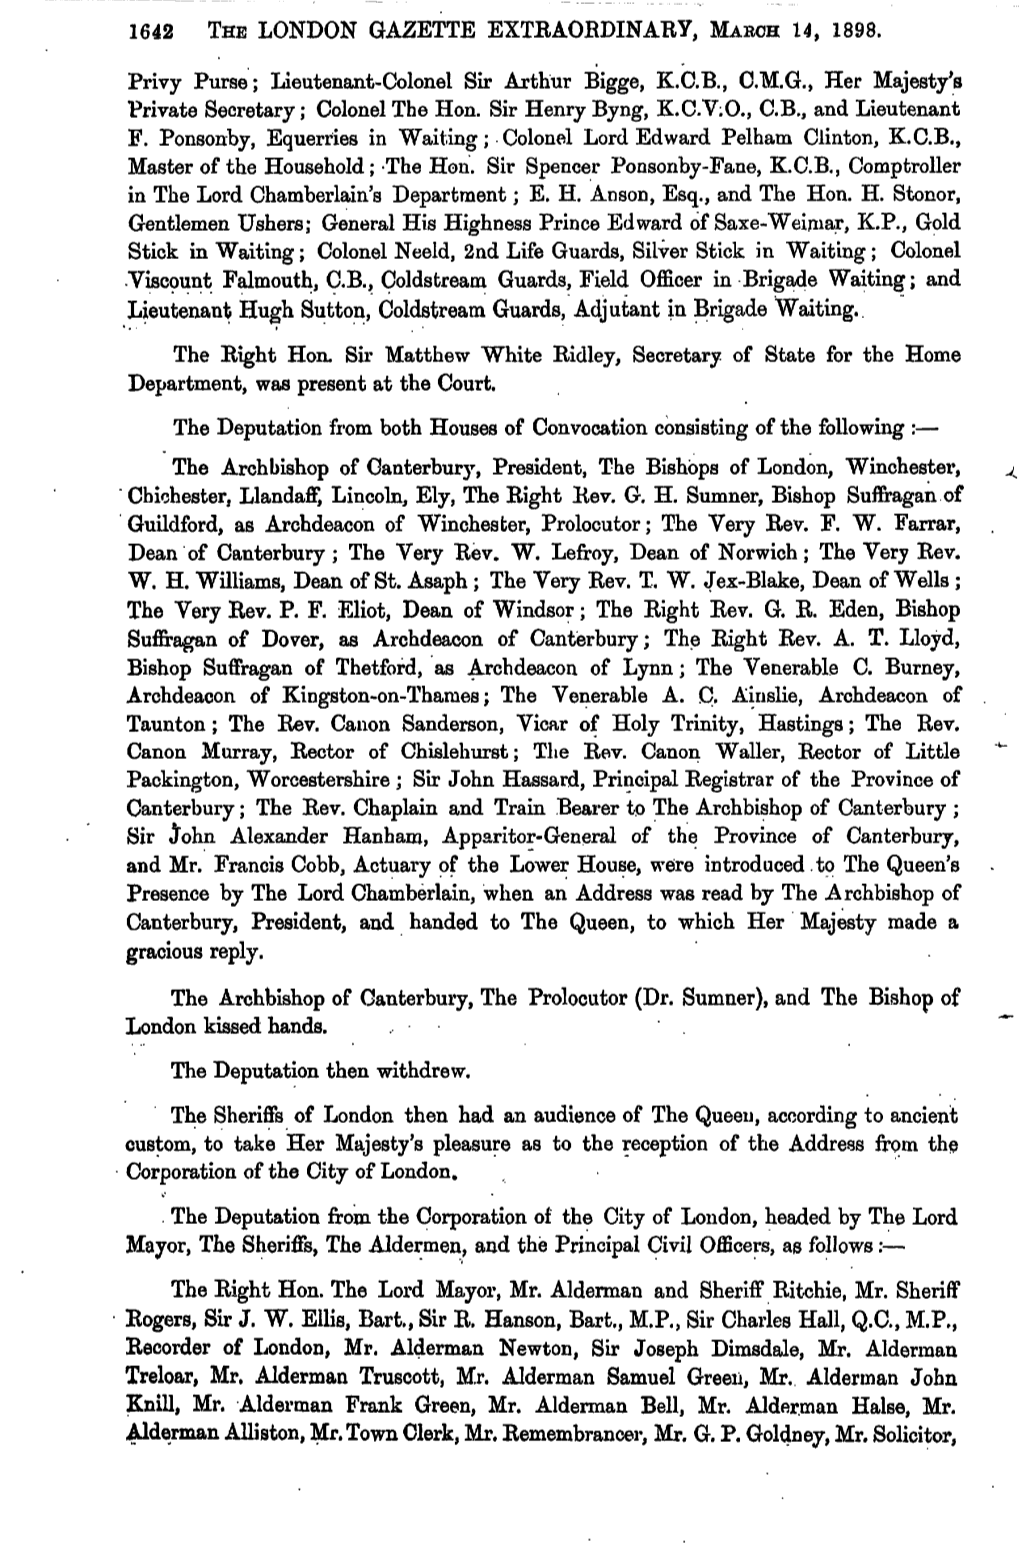 1642 the London Gazette Extraordinary, March 14, 1898